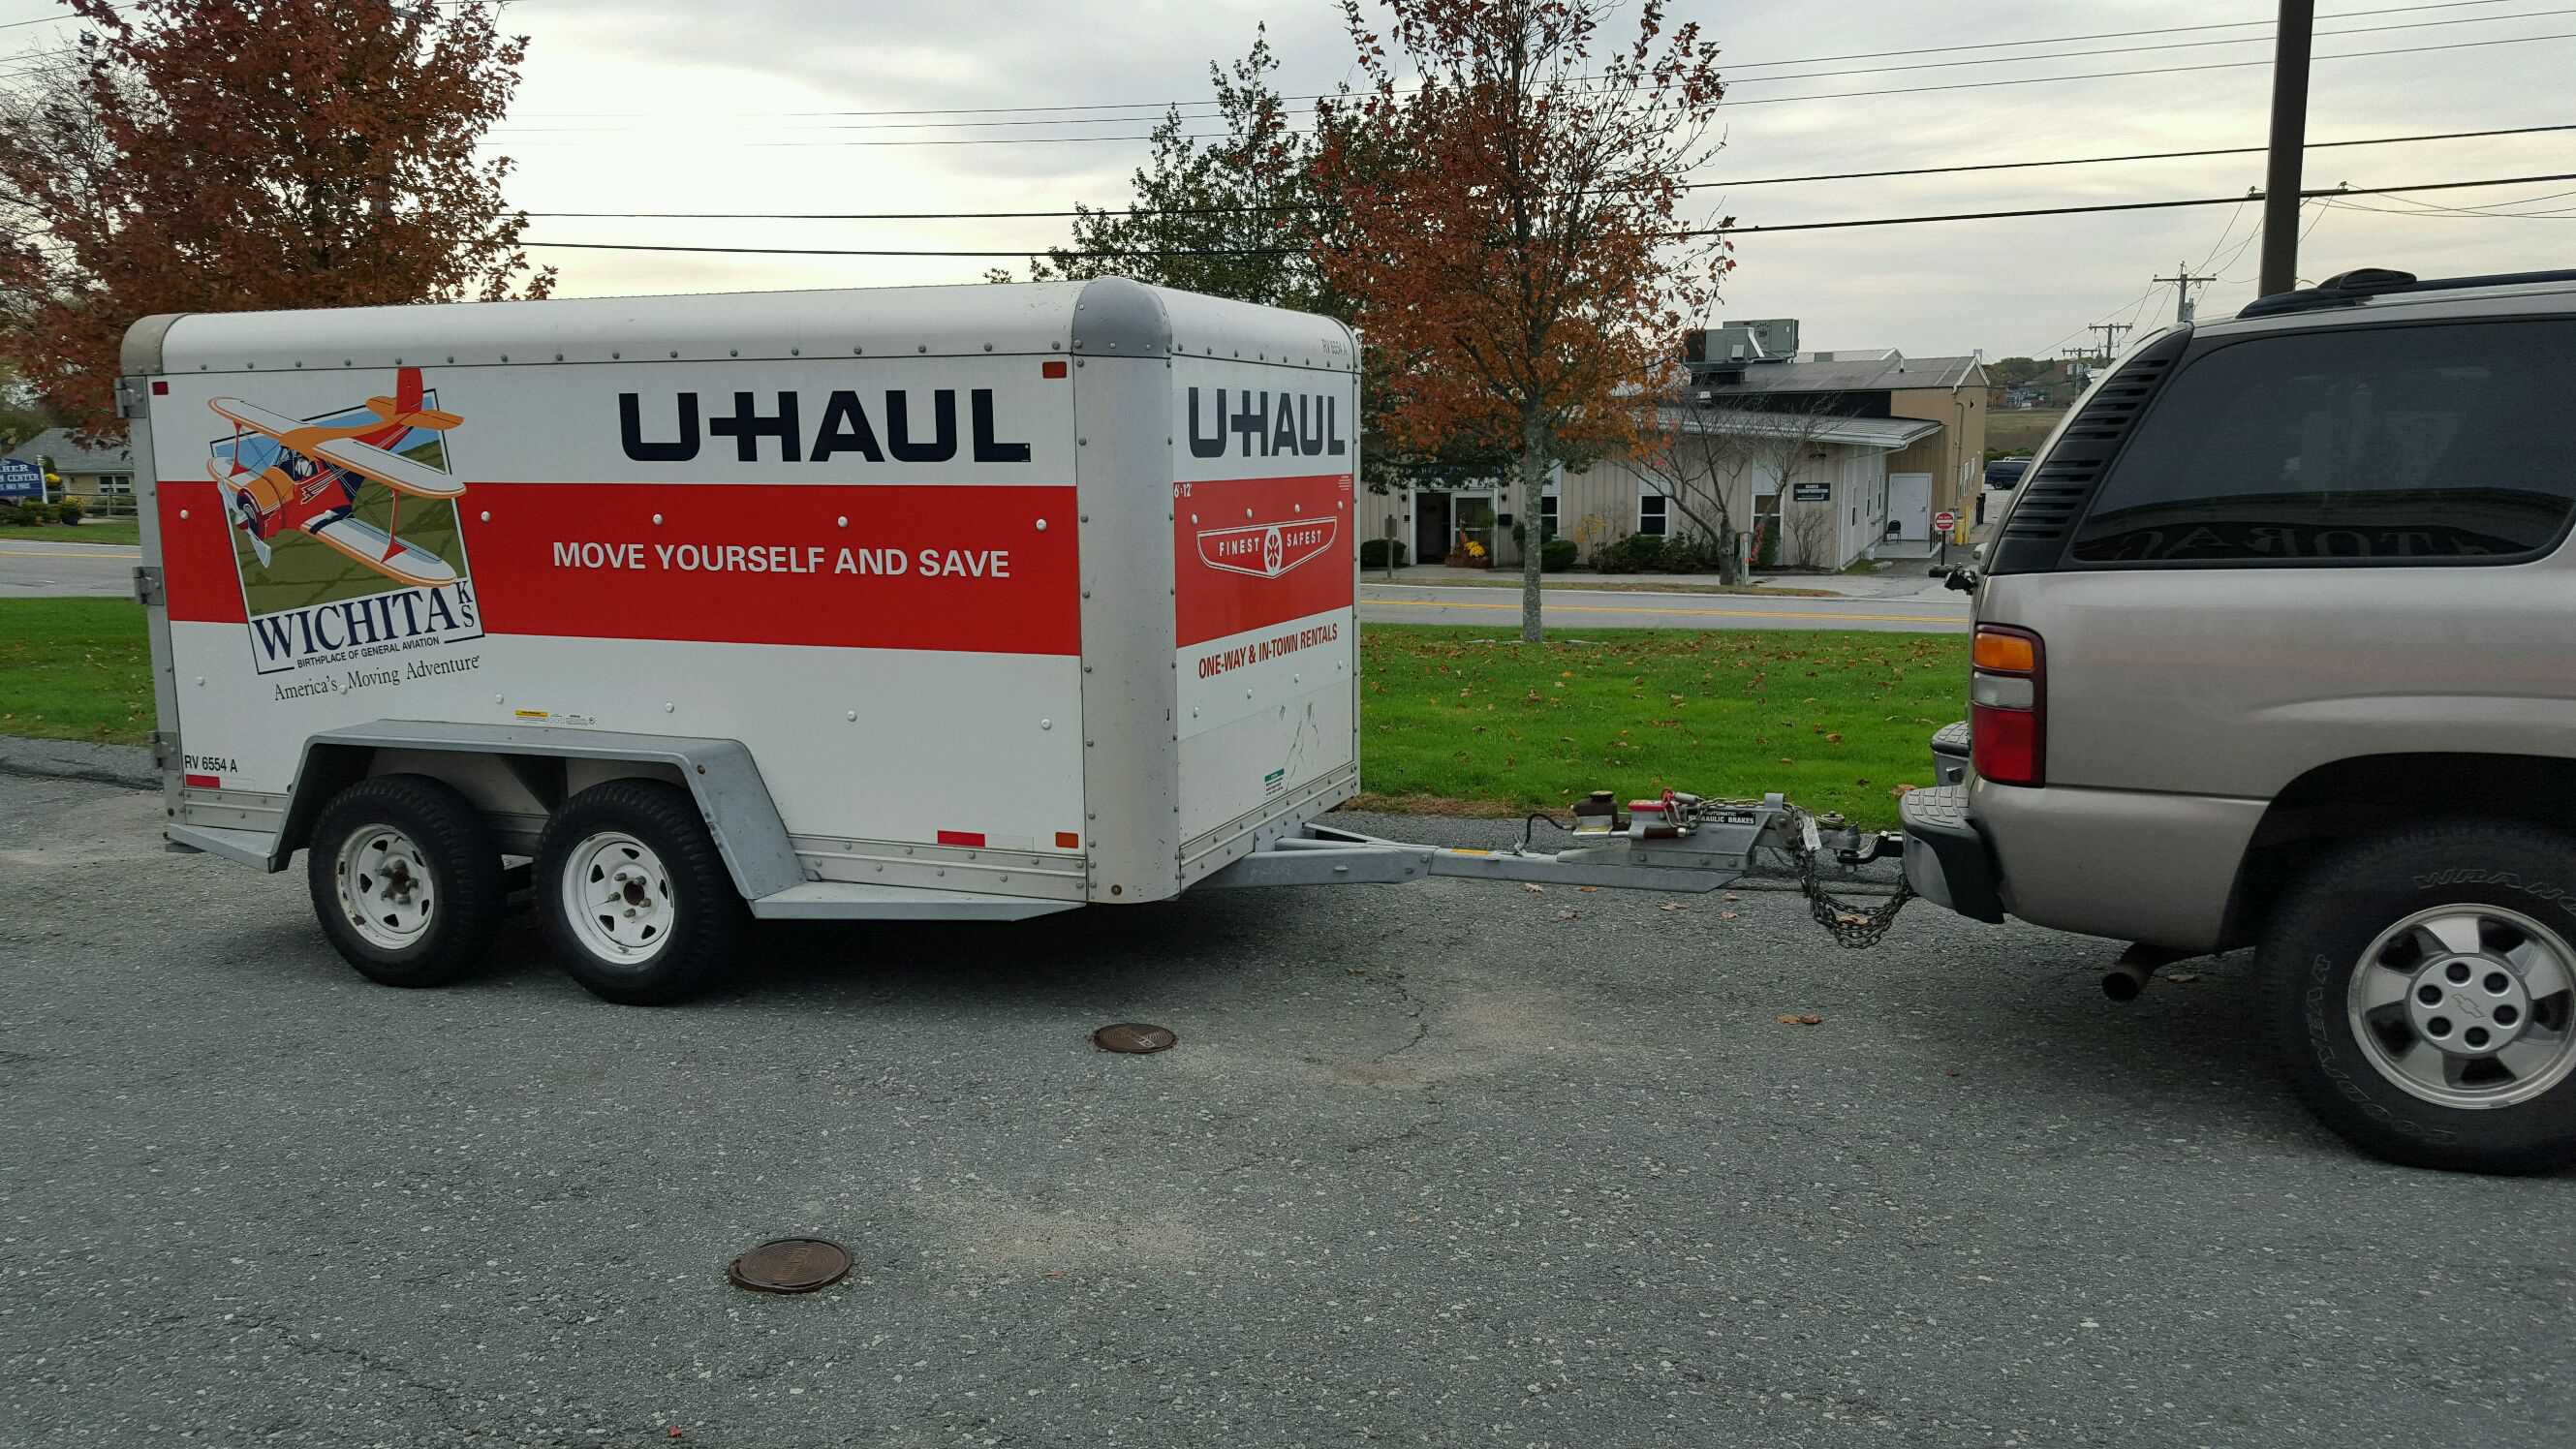 u haul trailer size for mattresses